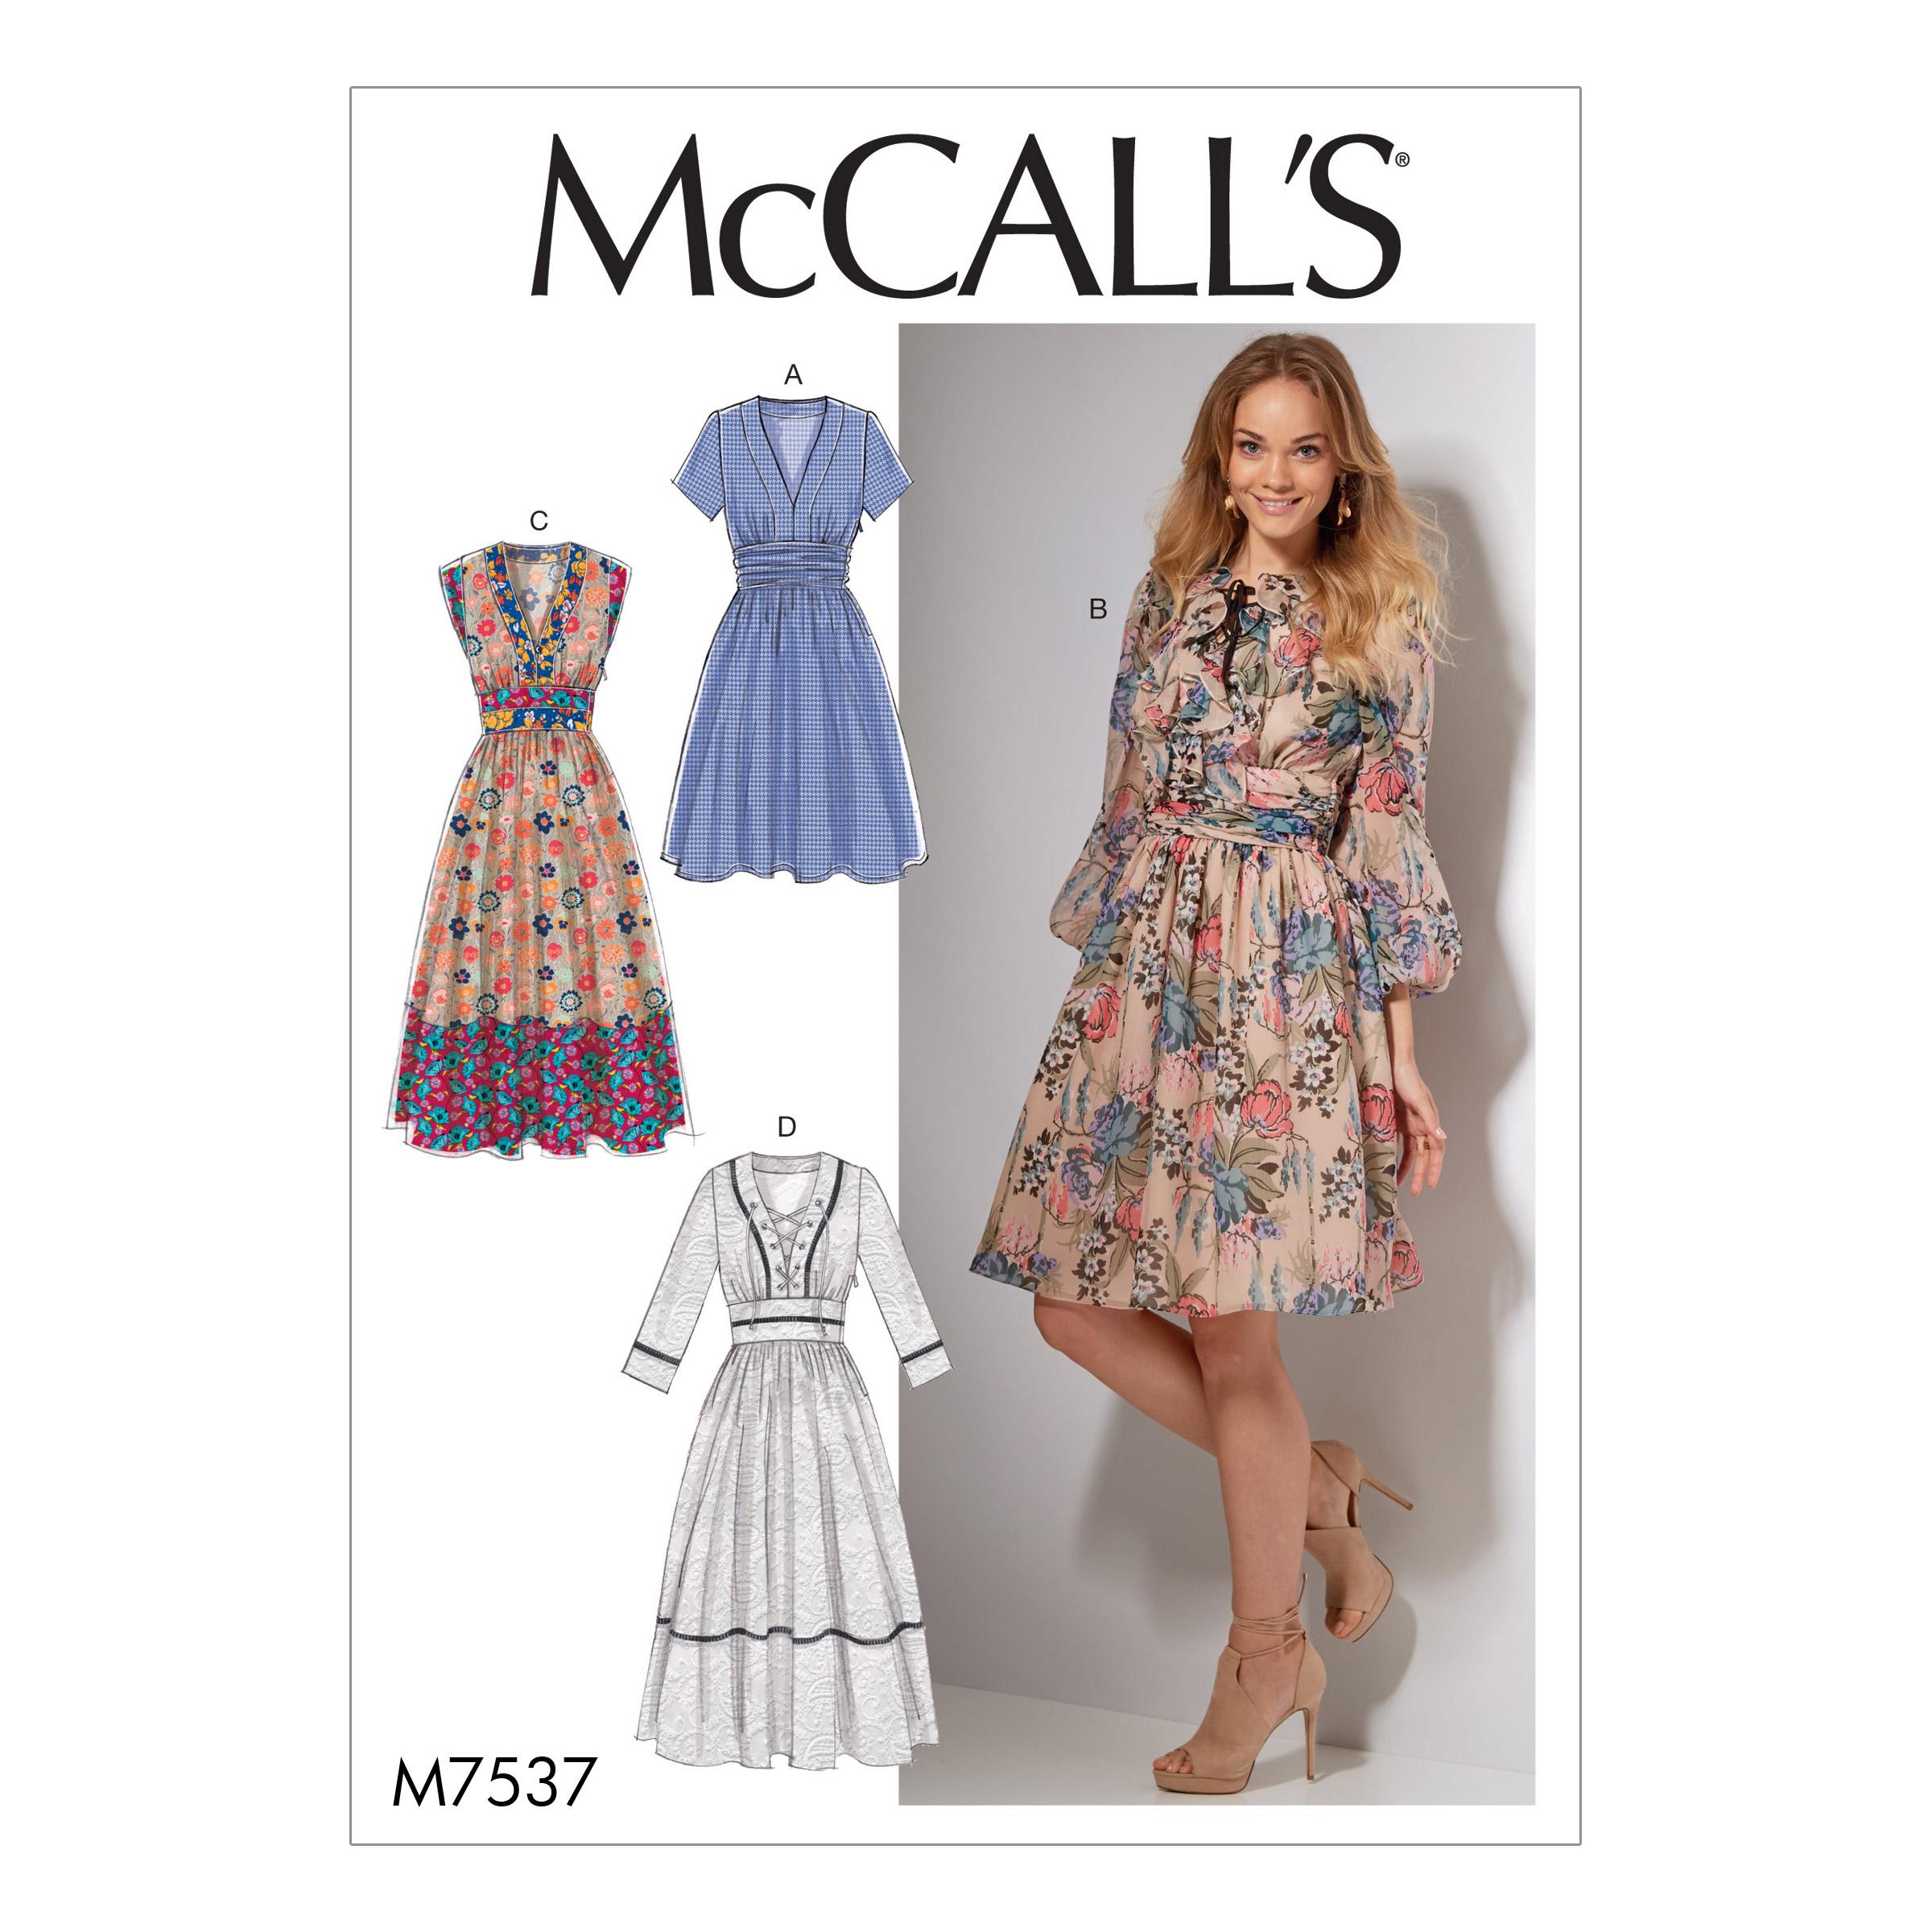 McCalls M7537 Misses Dresses